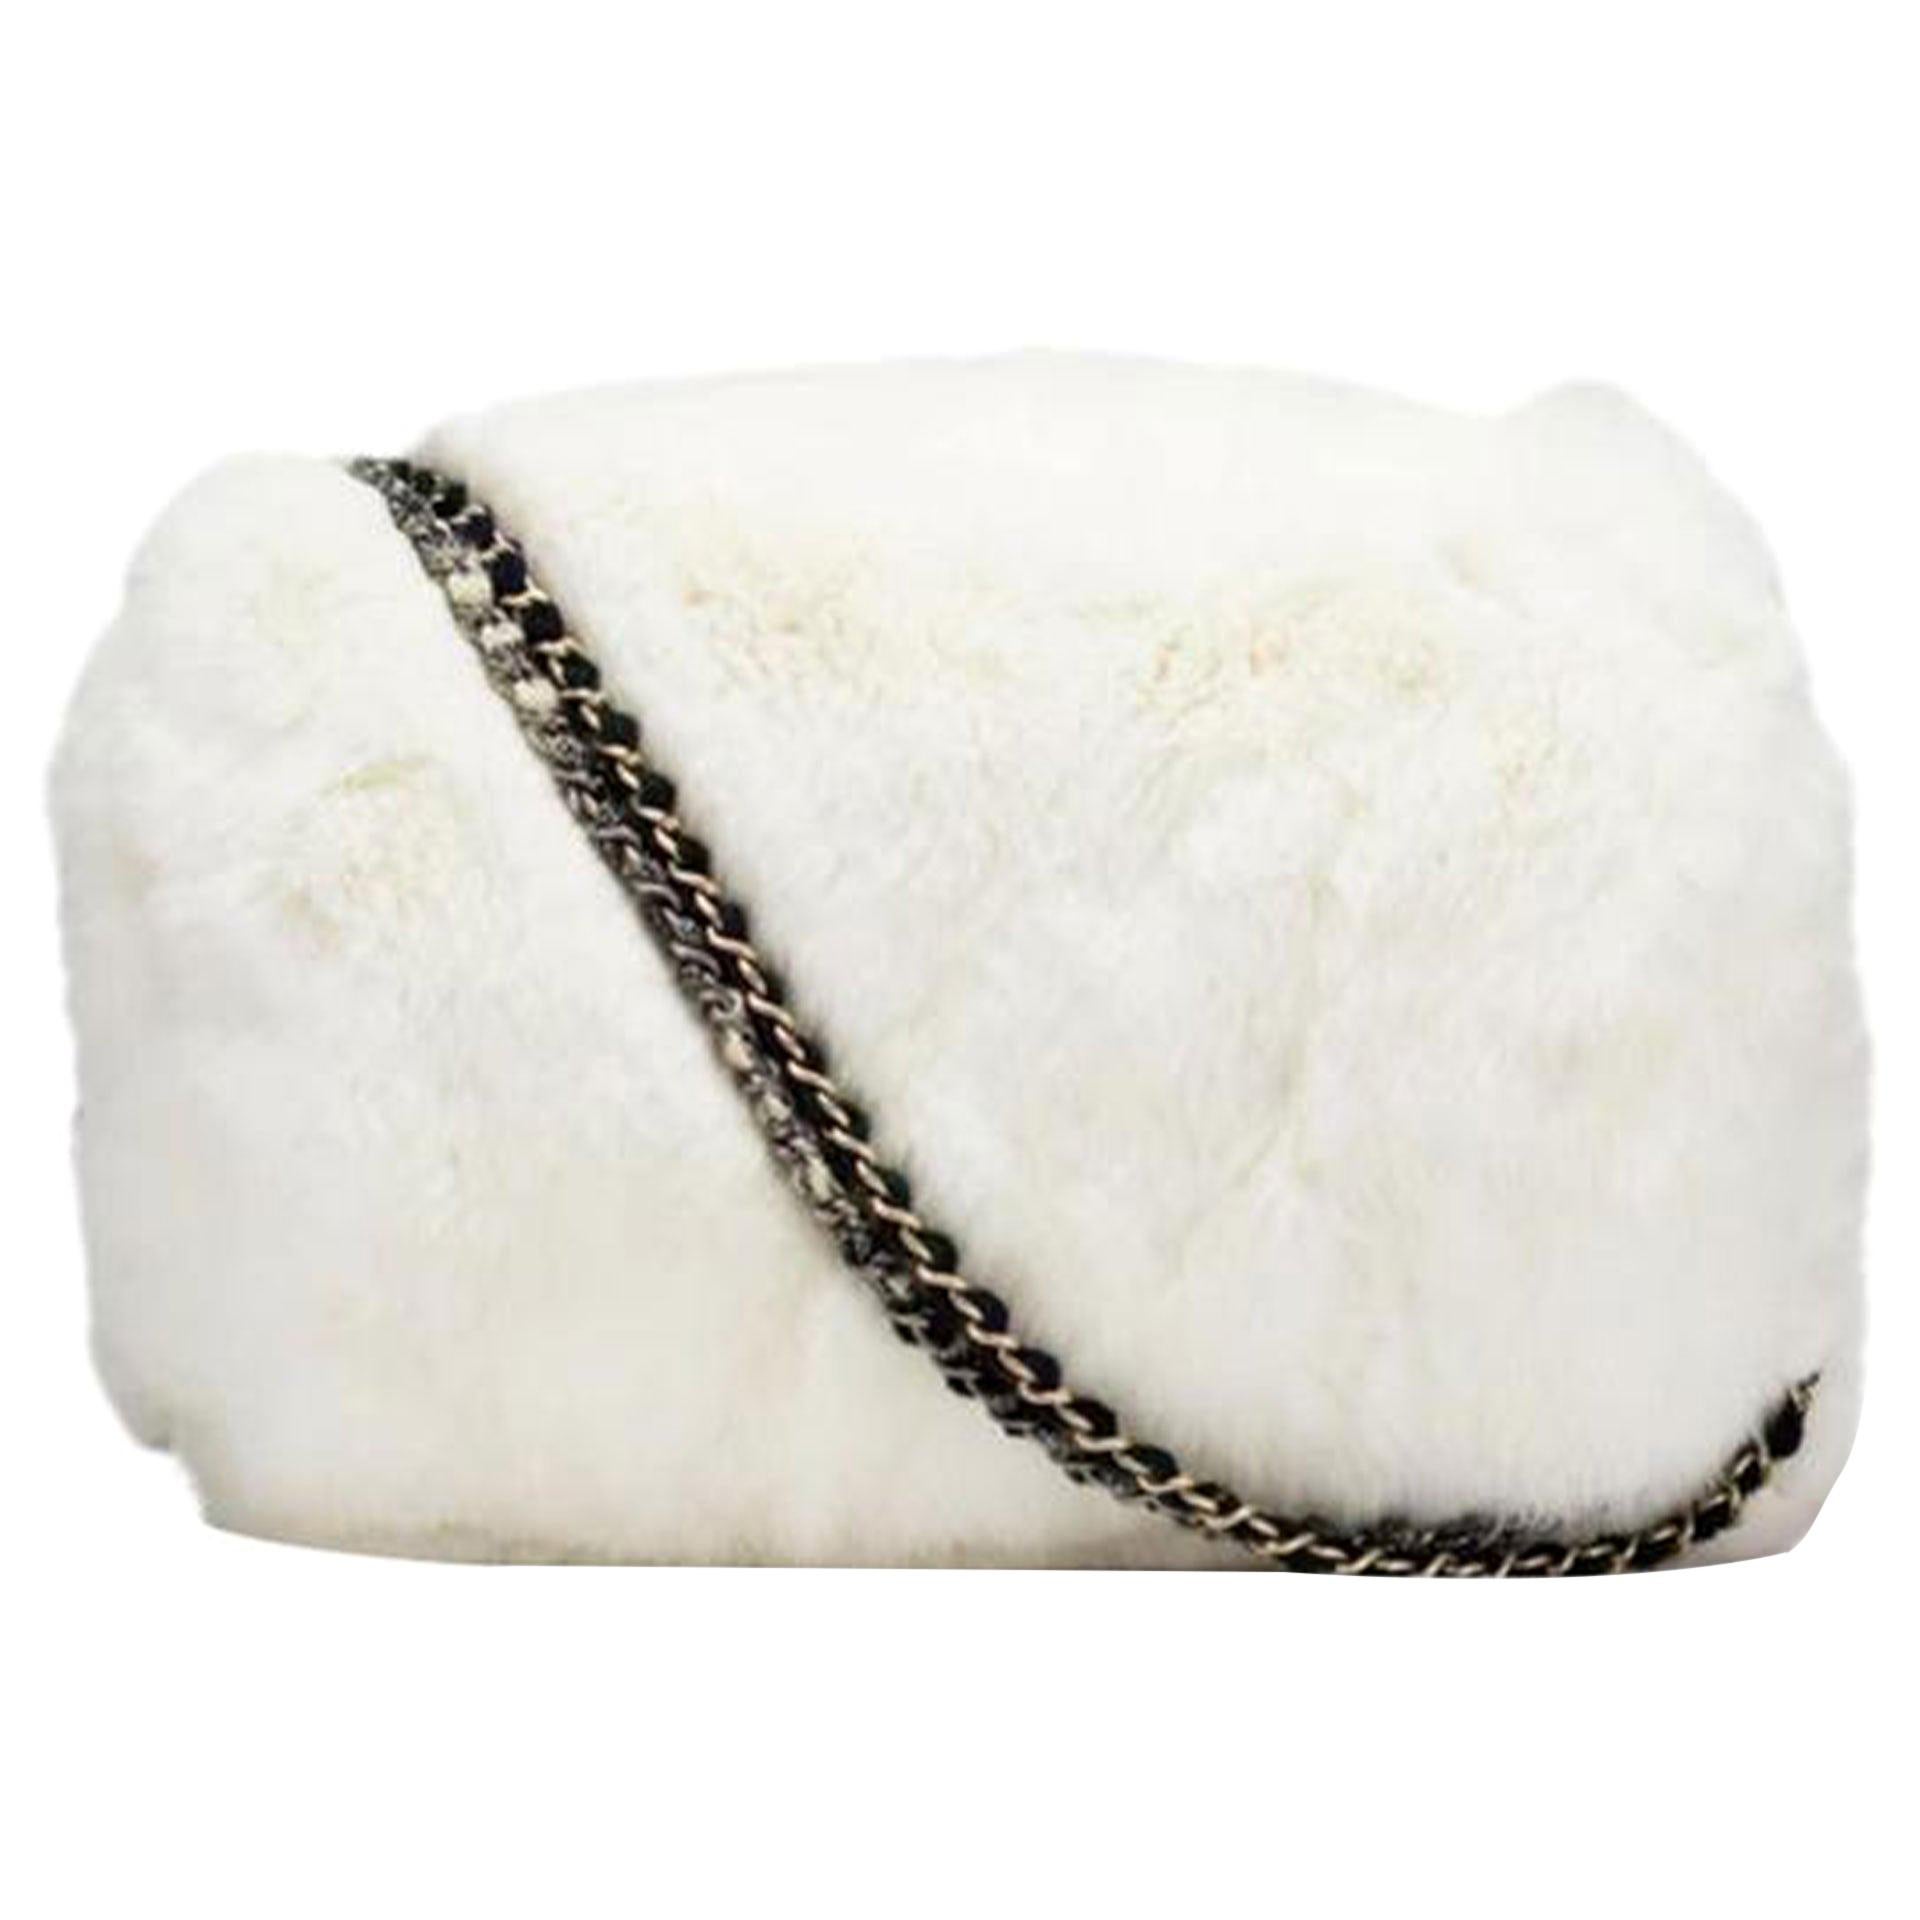 Chanel Chain Vintage Muff Black and White Grey Tweed Fur Cross Body Bag